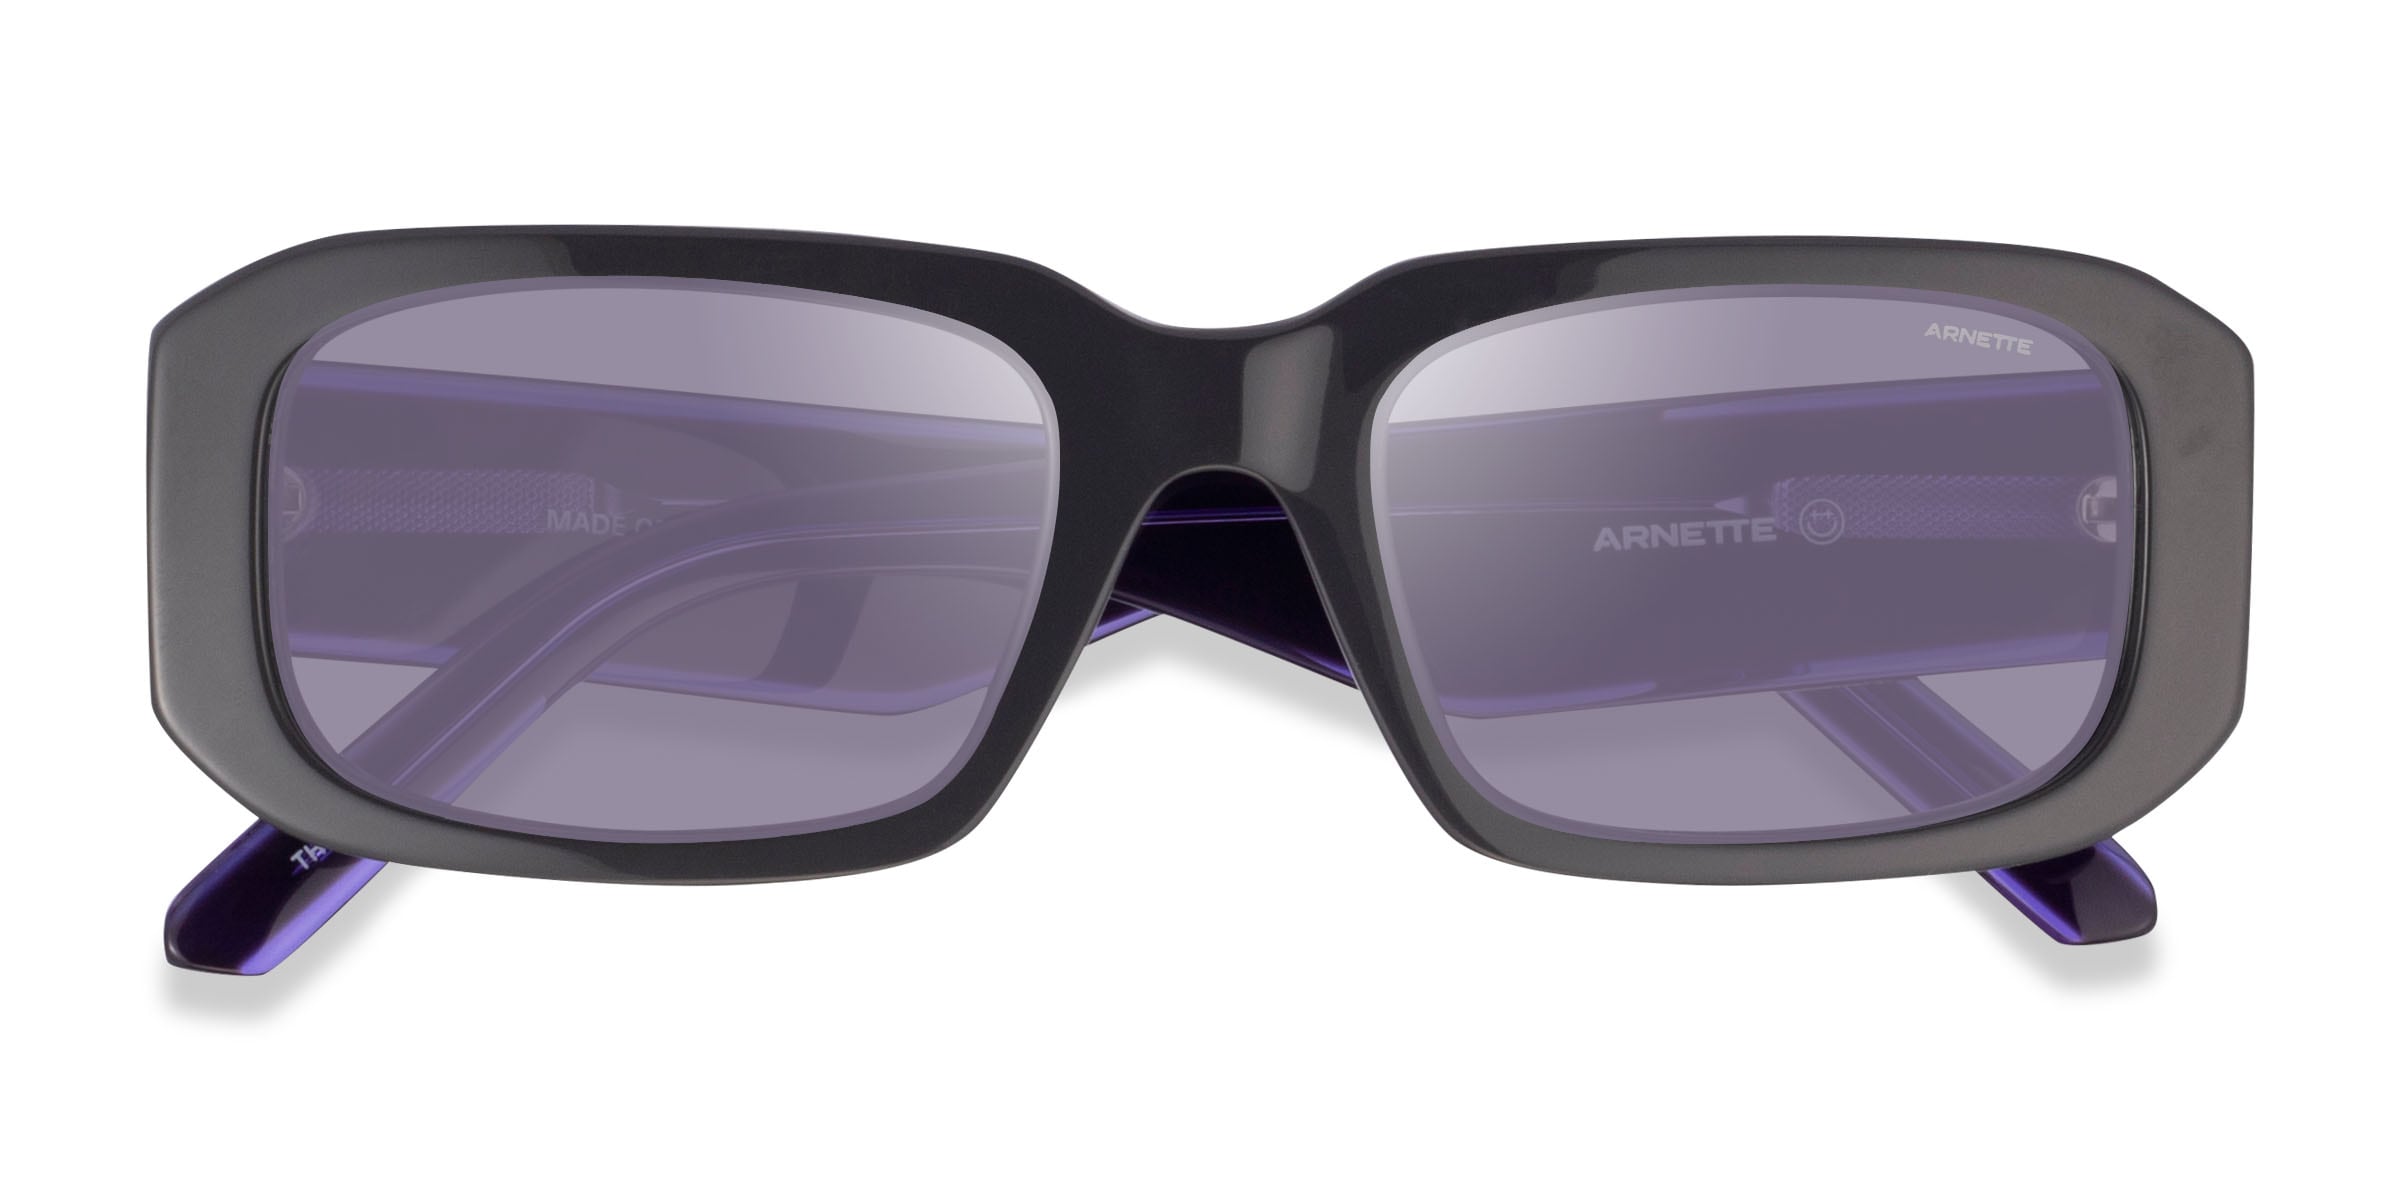 ARNETTE Thekidd - Square Gray Frame Prescription Sunglasses 